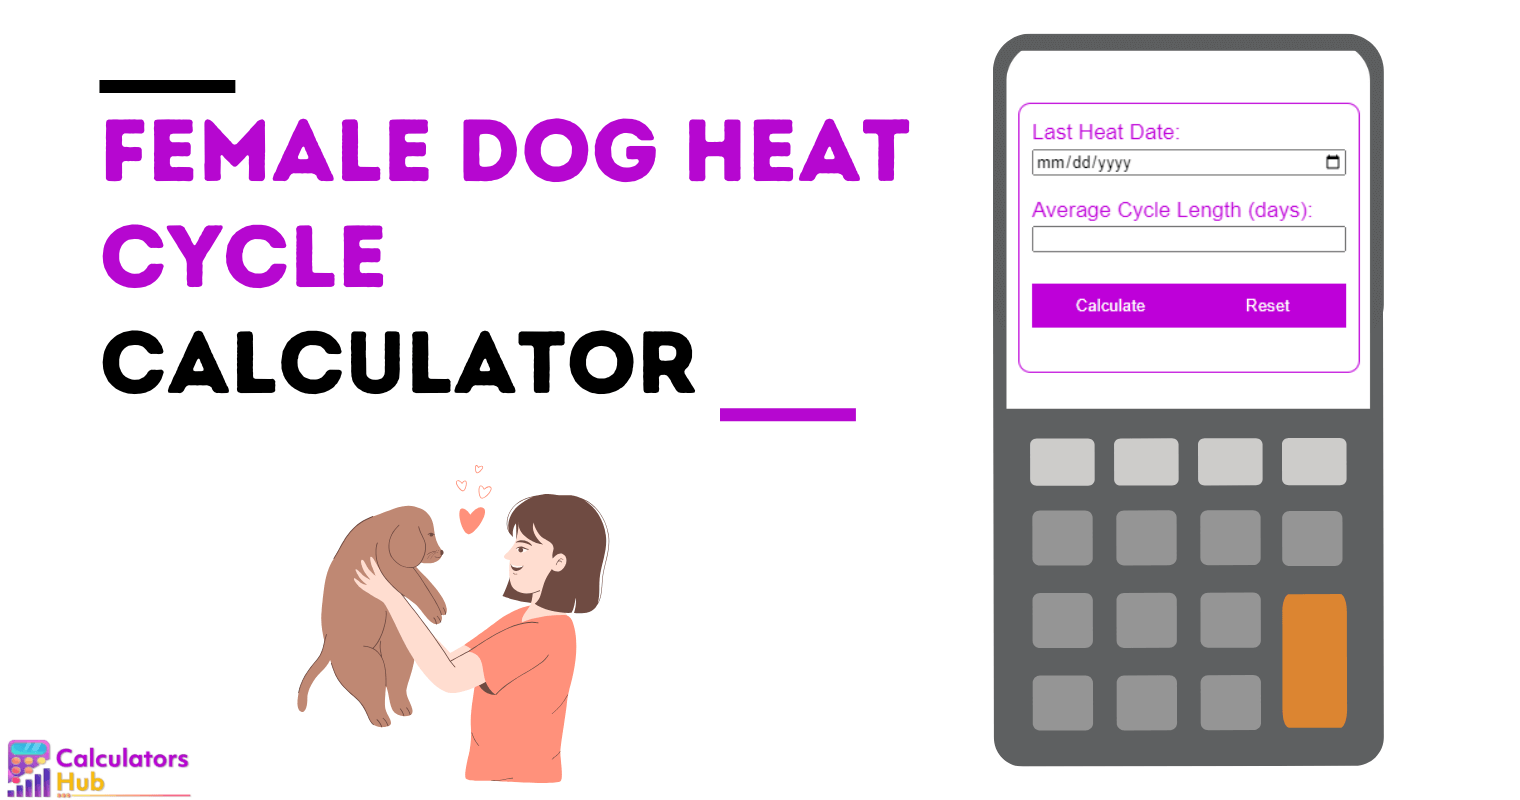 Calculadora de ciclo de calor para cadela